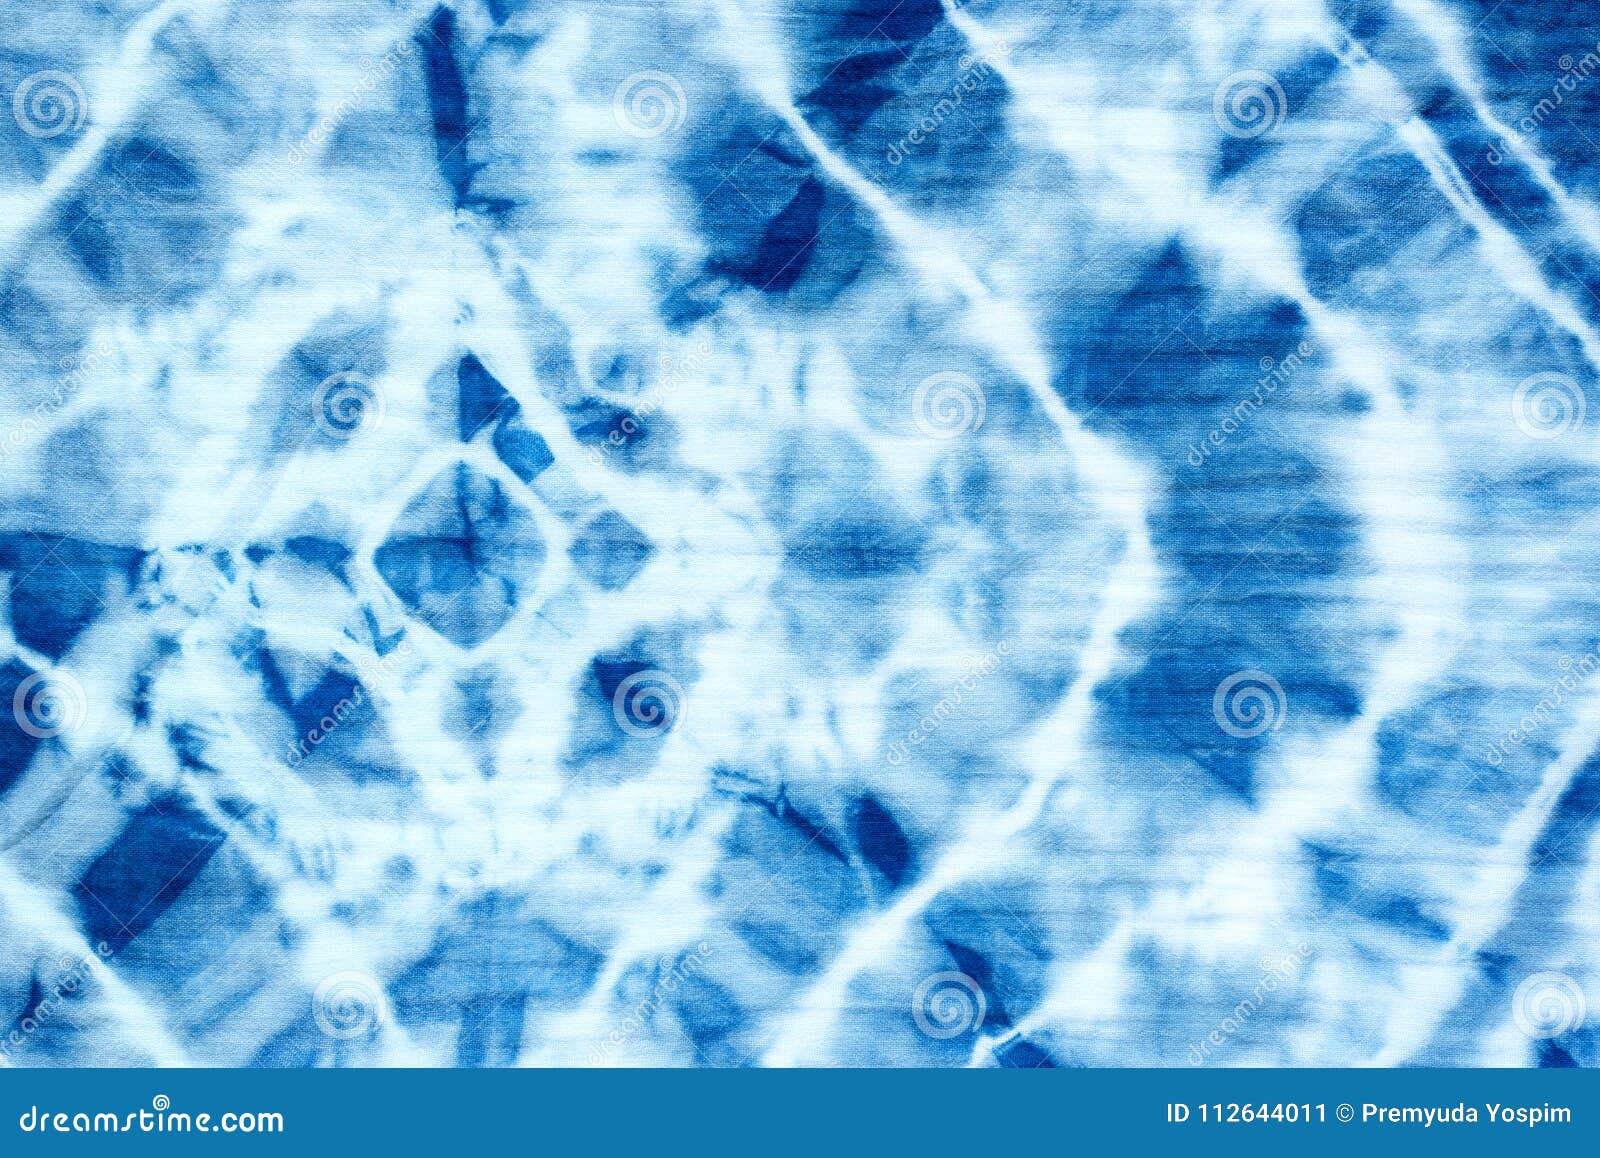 blue tie dye pattern abstact background.